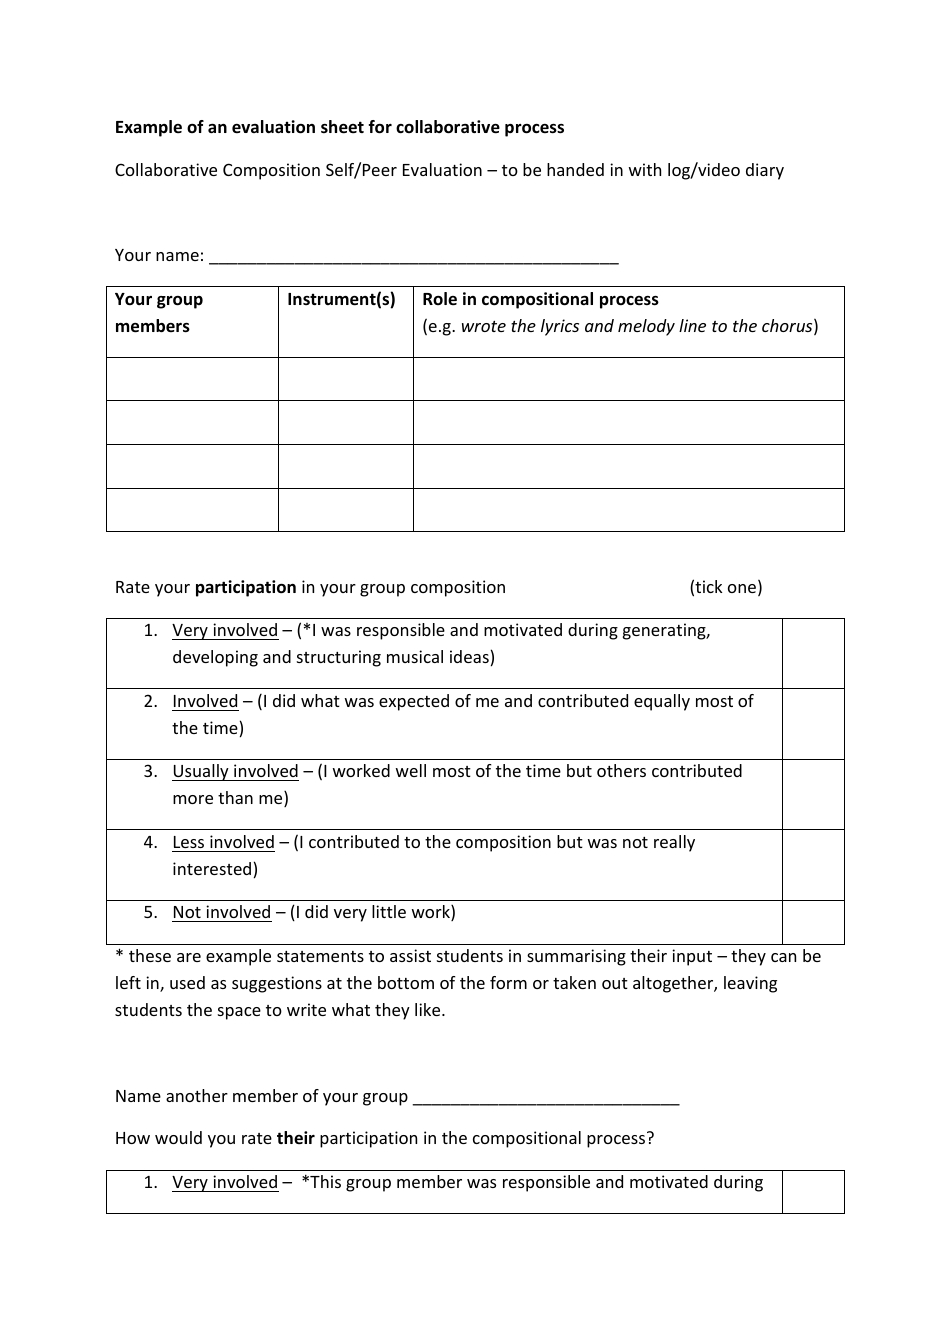 Collaborative Process Evaluation Form, Page 1